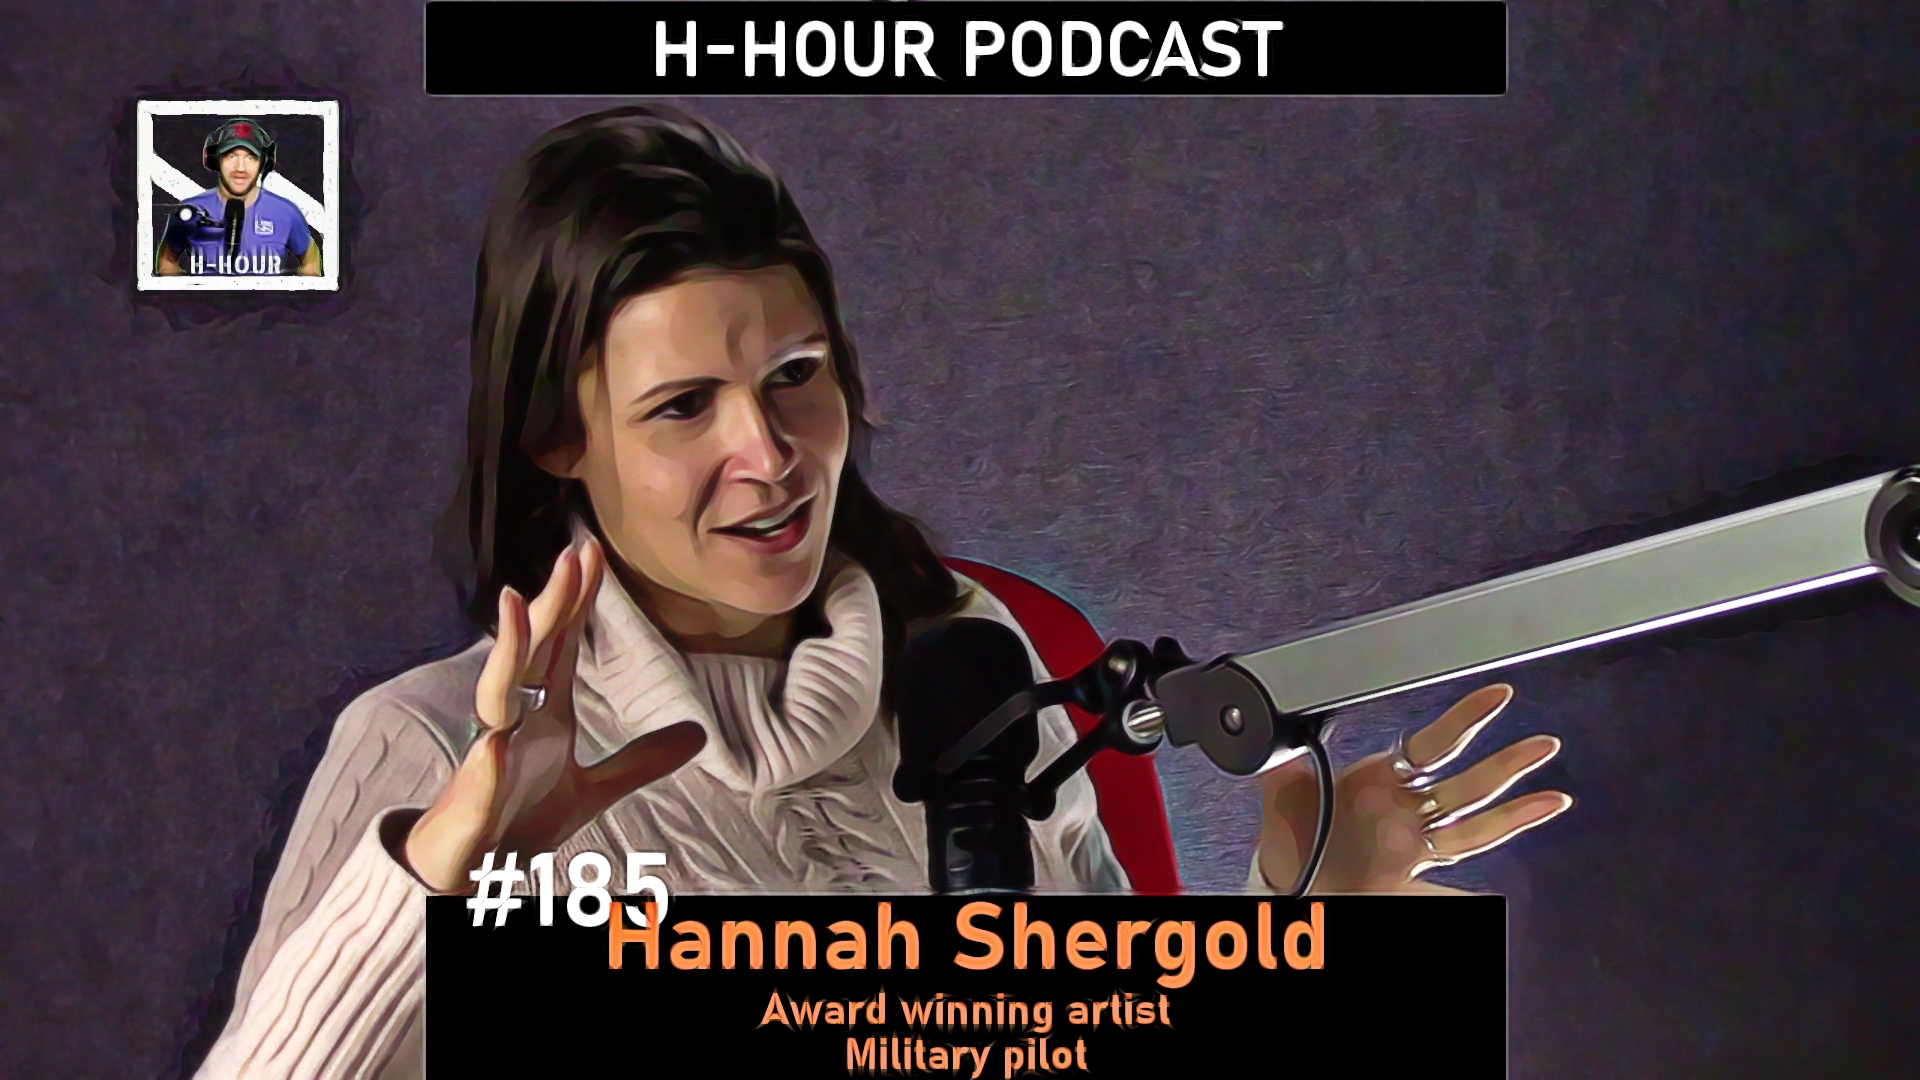 H-Hour Podcast #185 Hannah Shergold - artist, Army pilot, Tusk ambassador and fundraiser